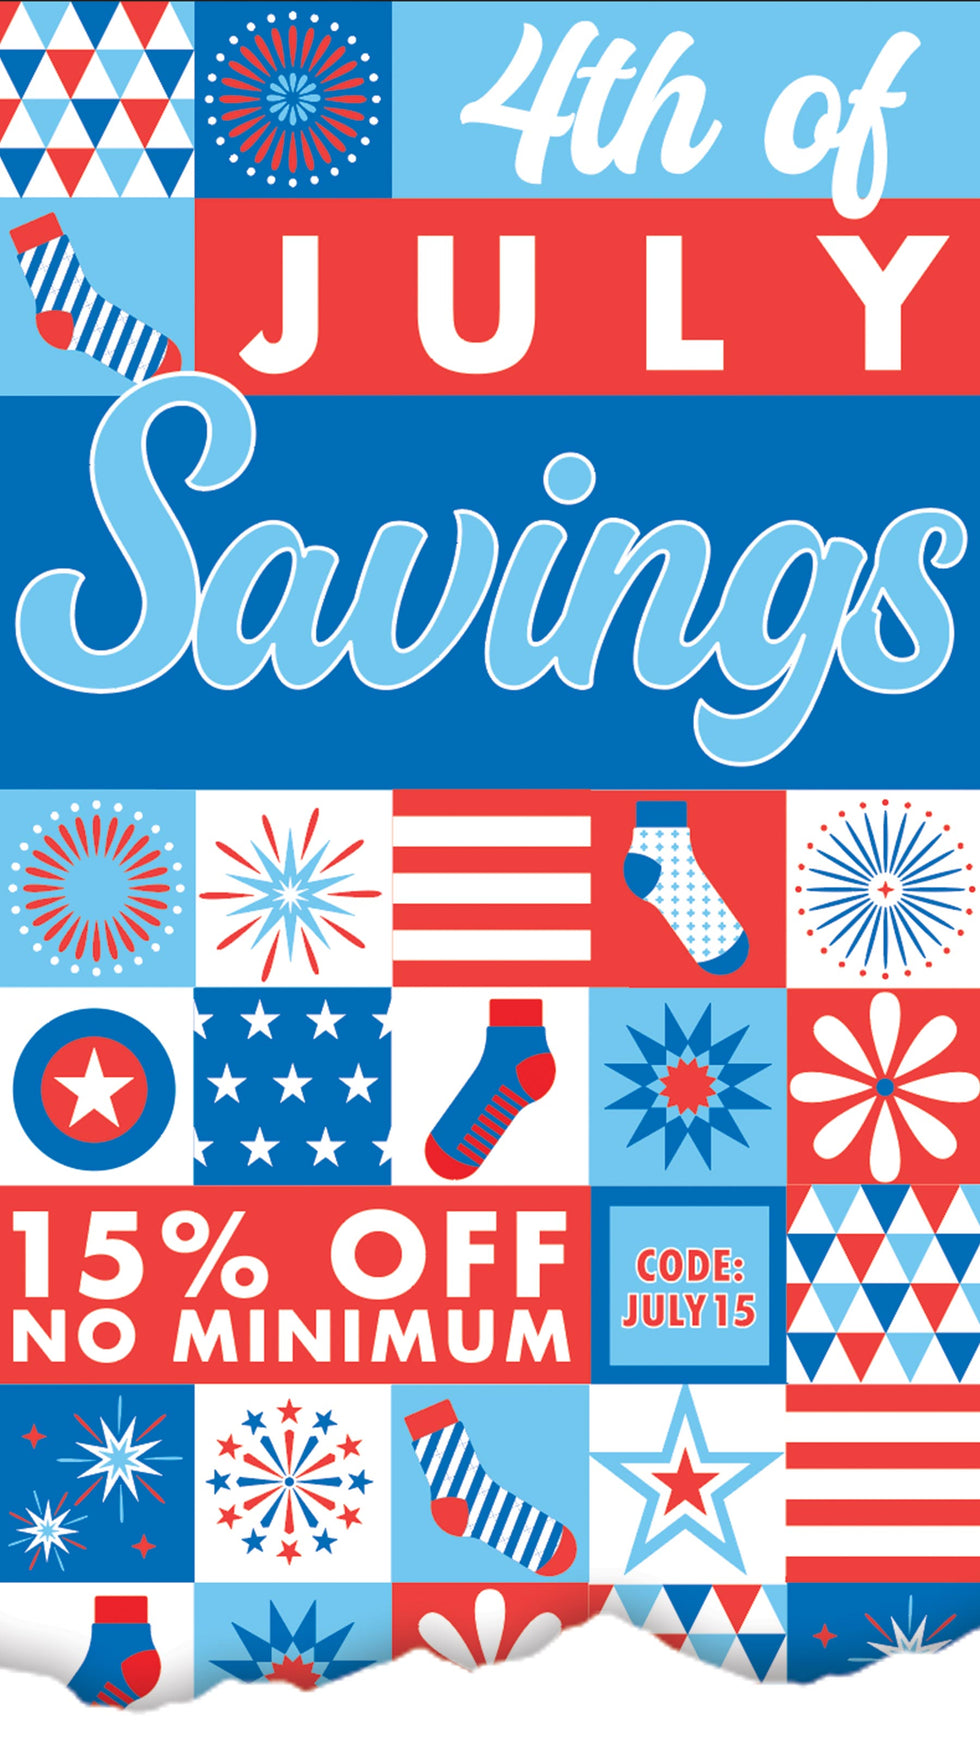 4th of July Savings 15% Off No Minimum Code JULY15